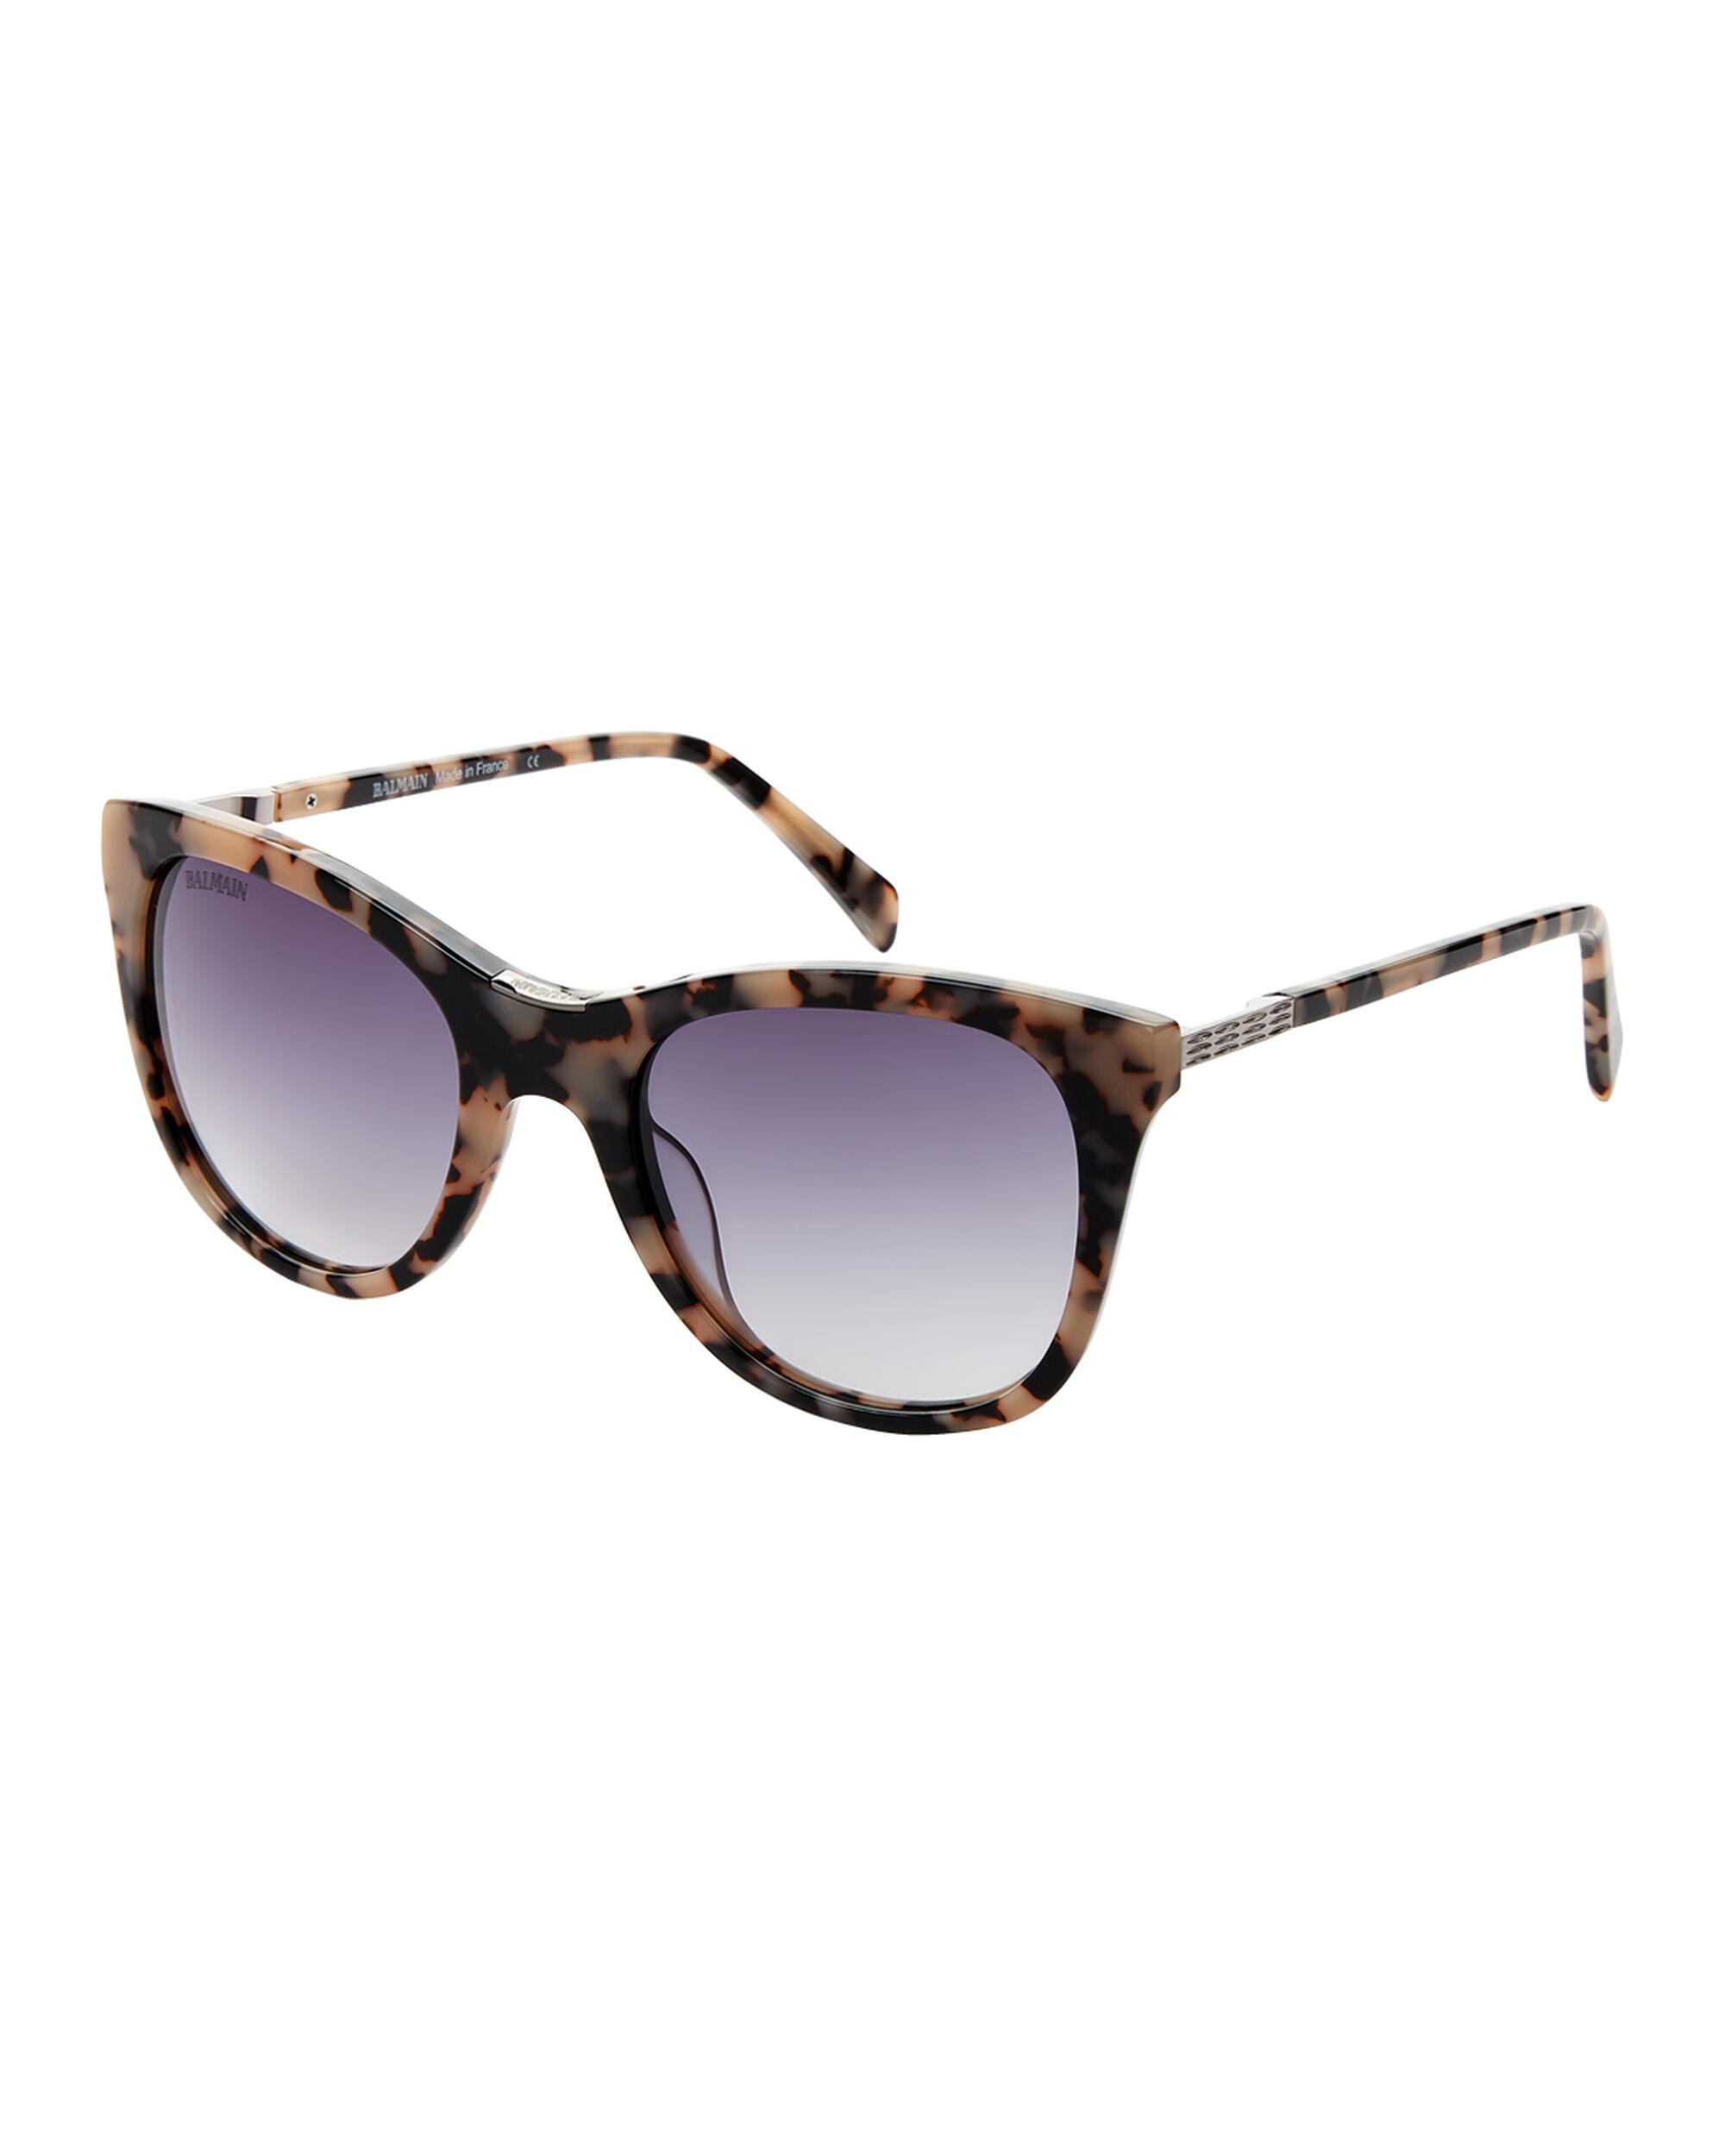 Balmain Bl2101 Tortoiseshell-look Round Sunglasses in Brown for Men - Lyst